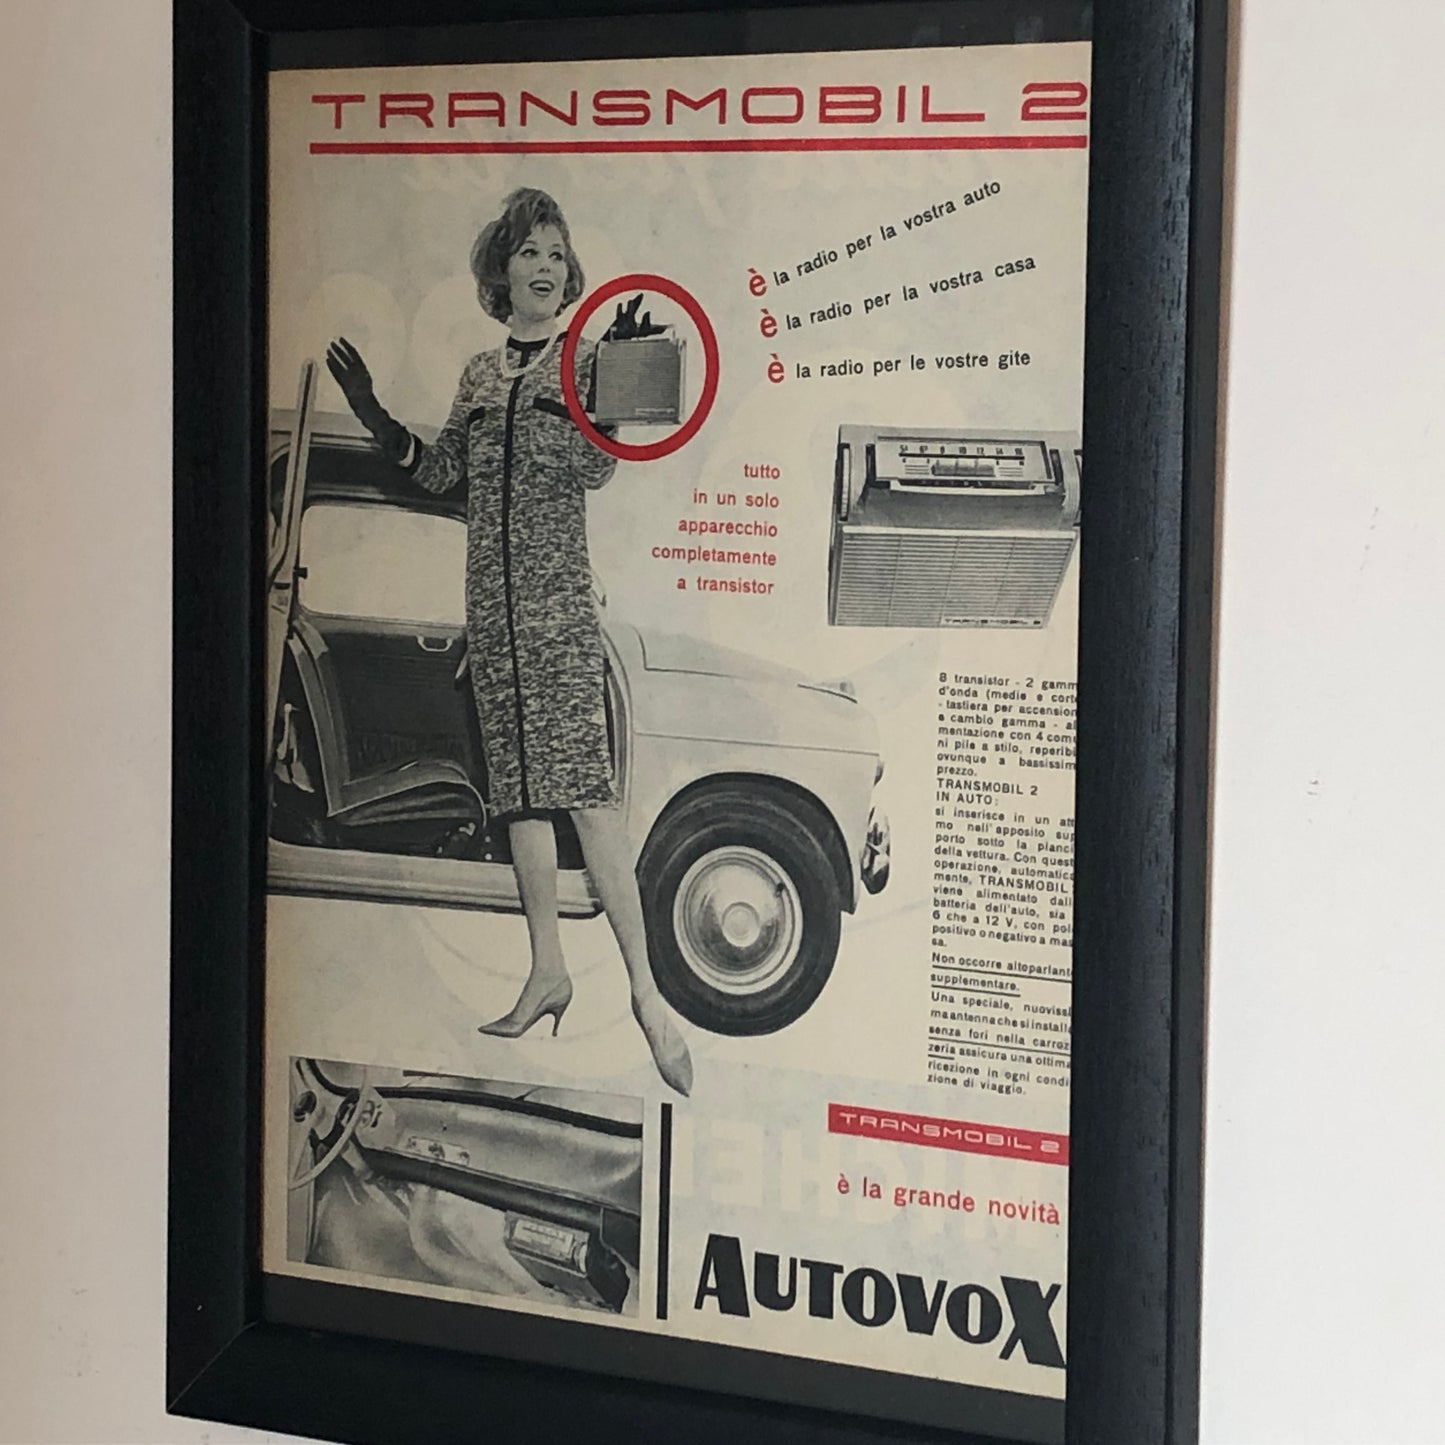 Autovox, Advertising Year 1960 Autovox Transmobil 2